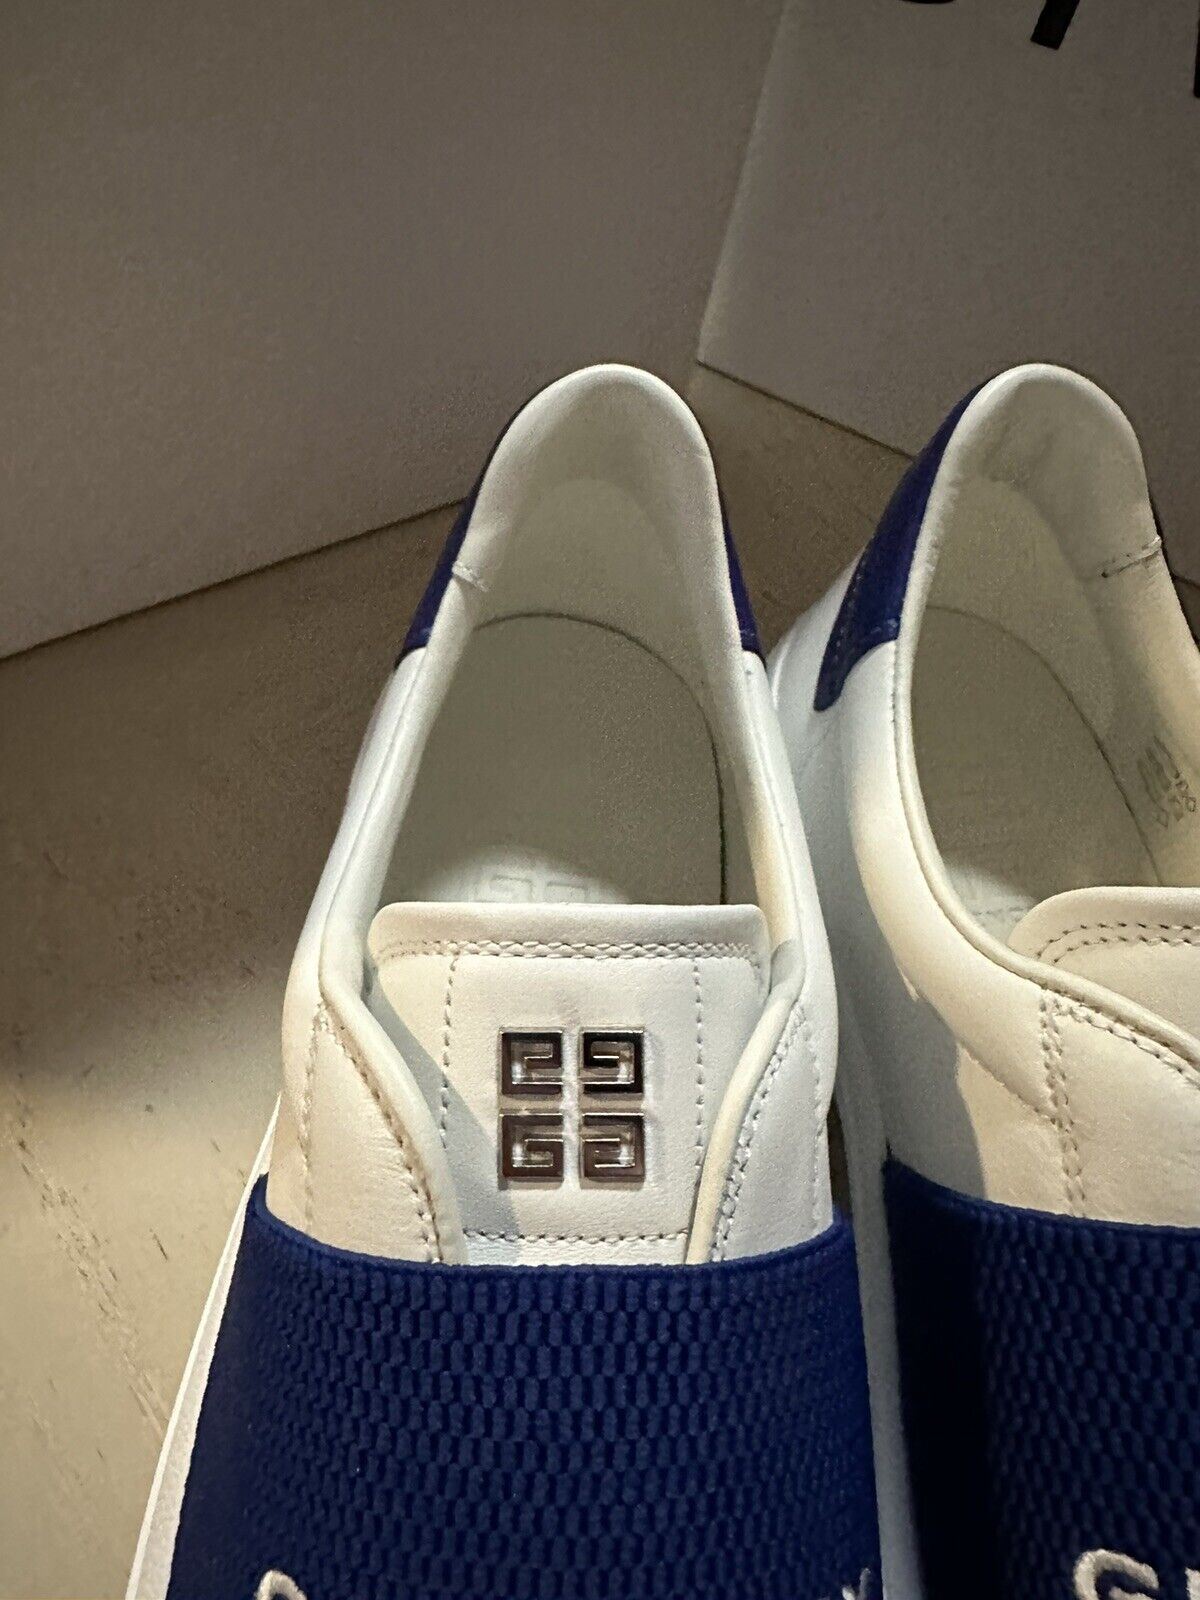 NIB Givenchy Herren City Sport Elastic Vamp Ledersneaker Weiß/Blau 9 US/42 Eu